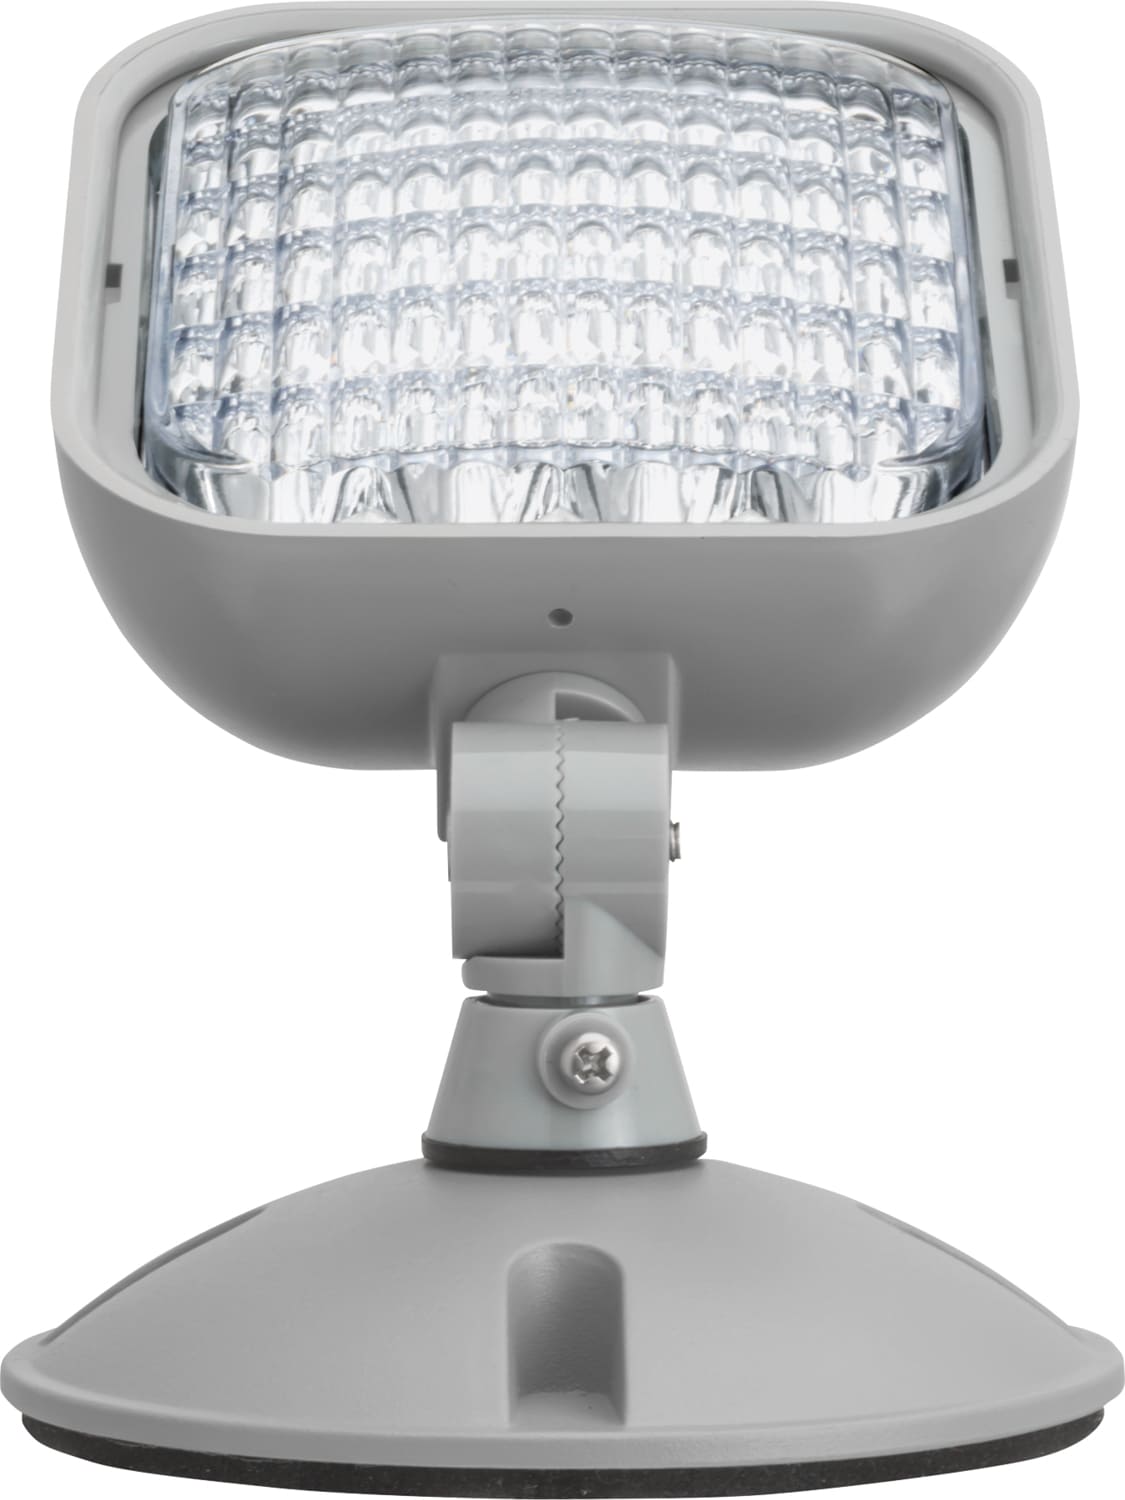 Lithonia Lighting TCLC 5.3-Watt 120/277-Volt LED White Hardwired